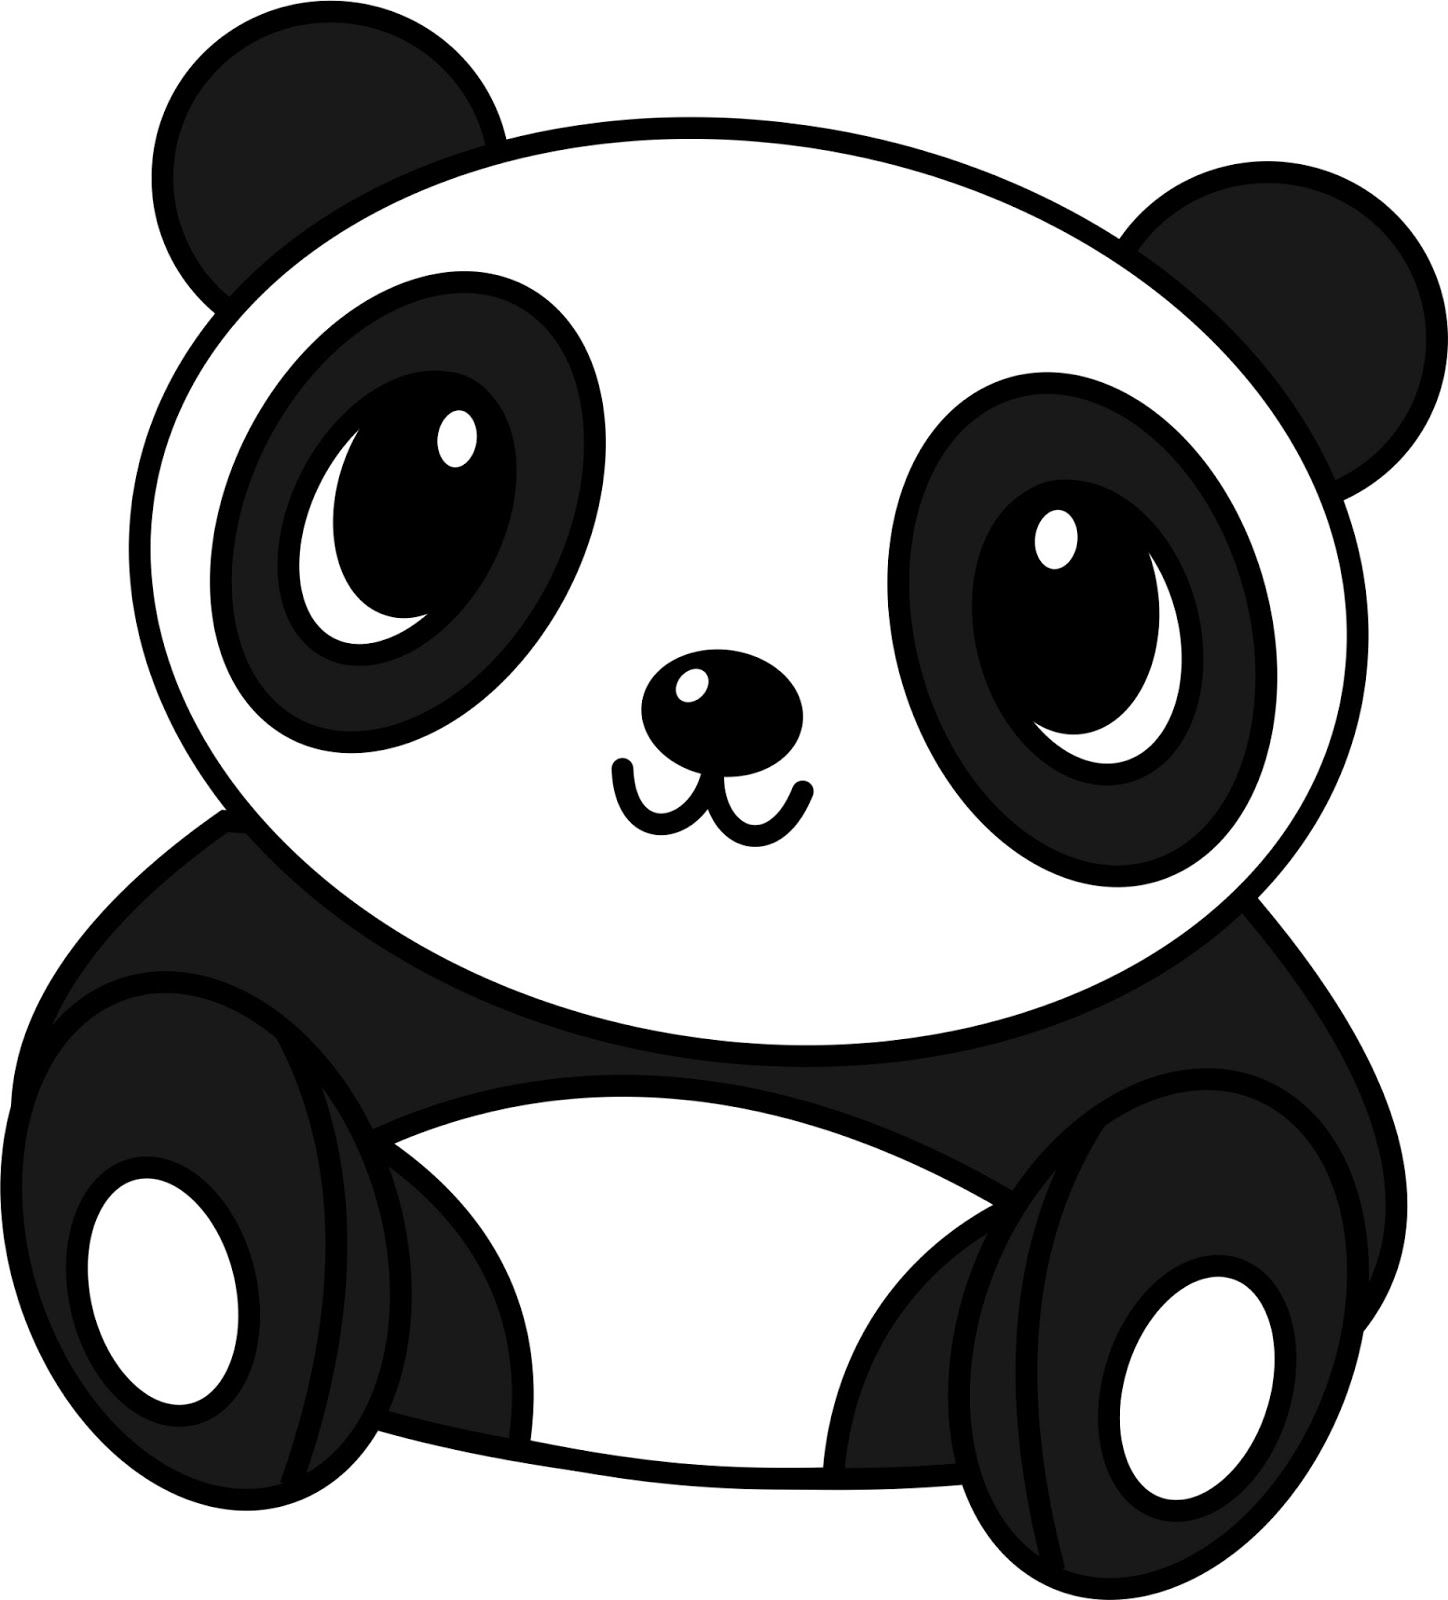 PANDA DRAWING EASY - YouTube